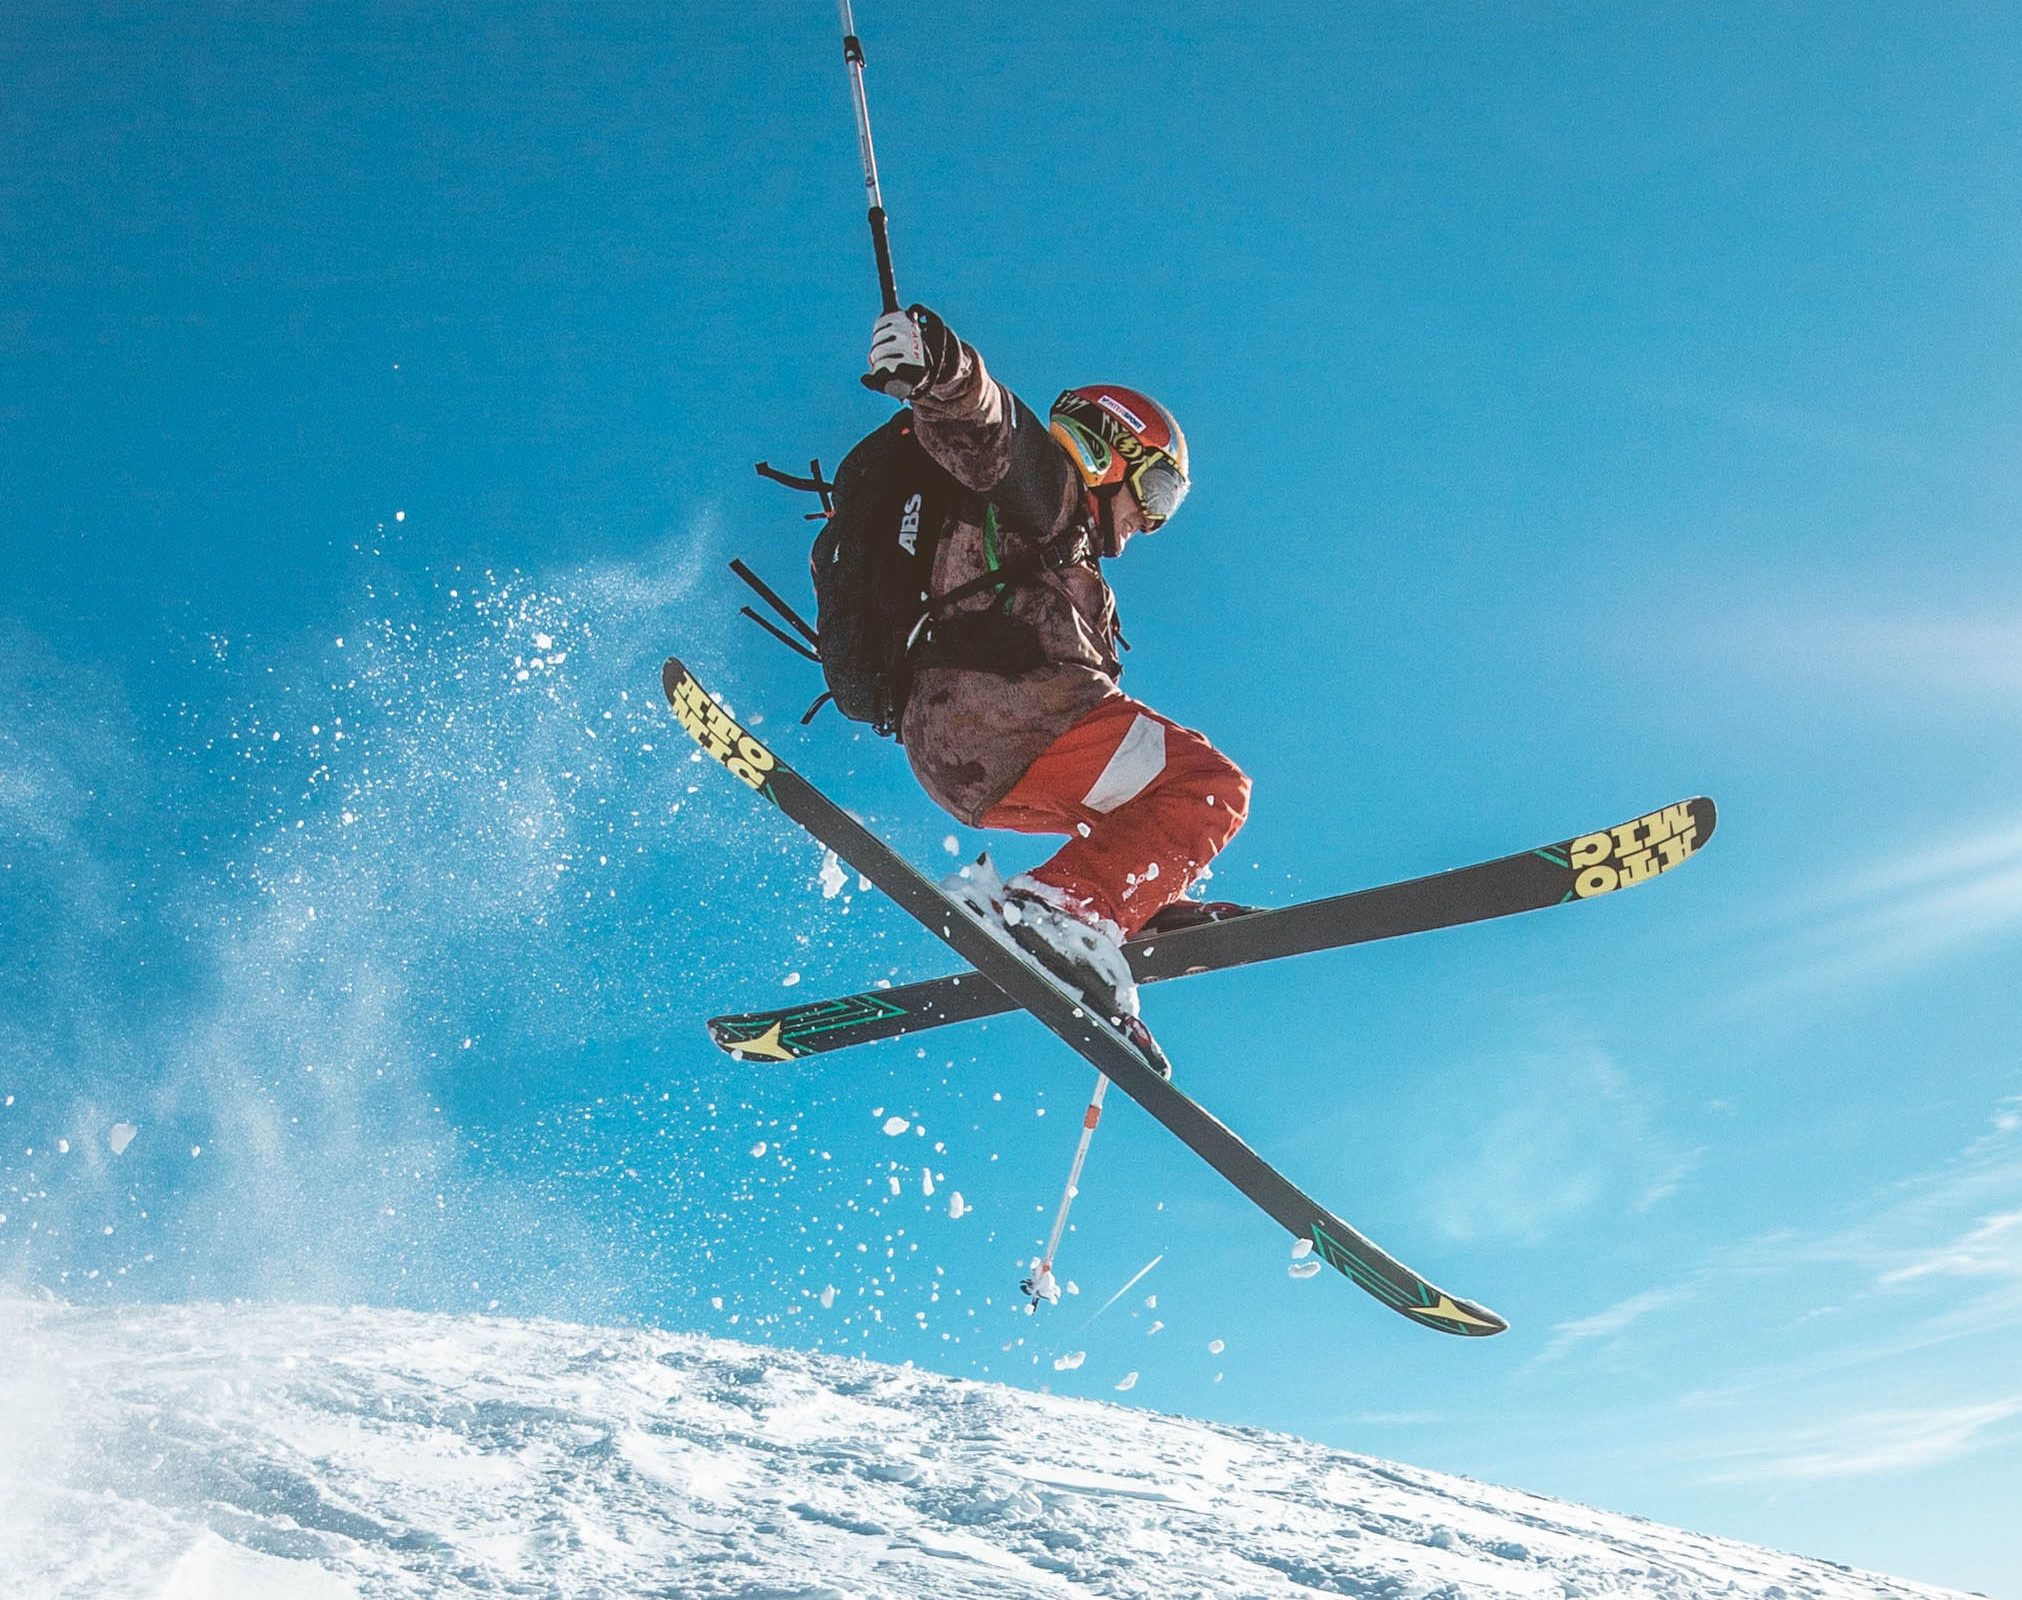 Season Ski Insurance